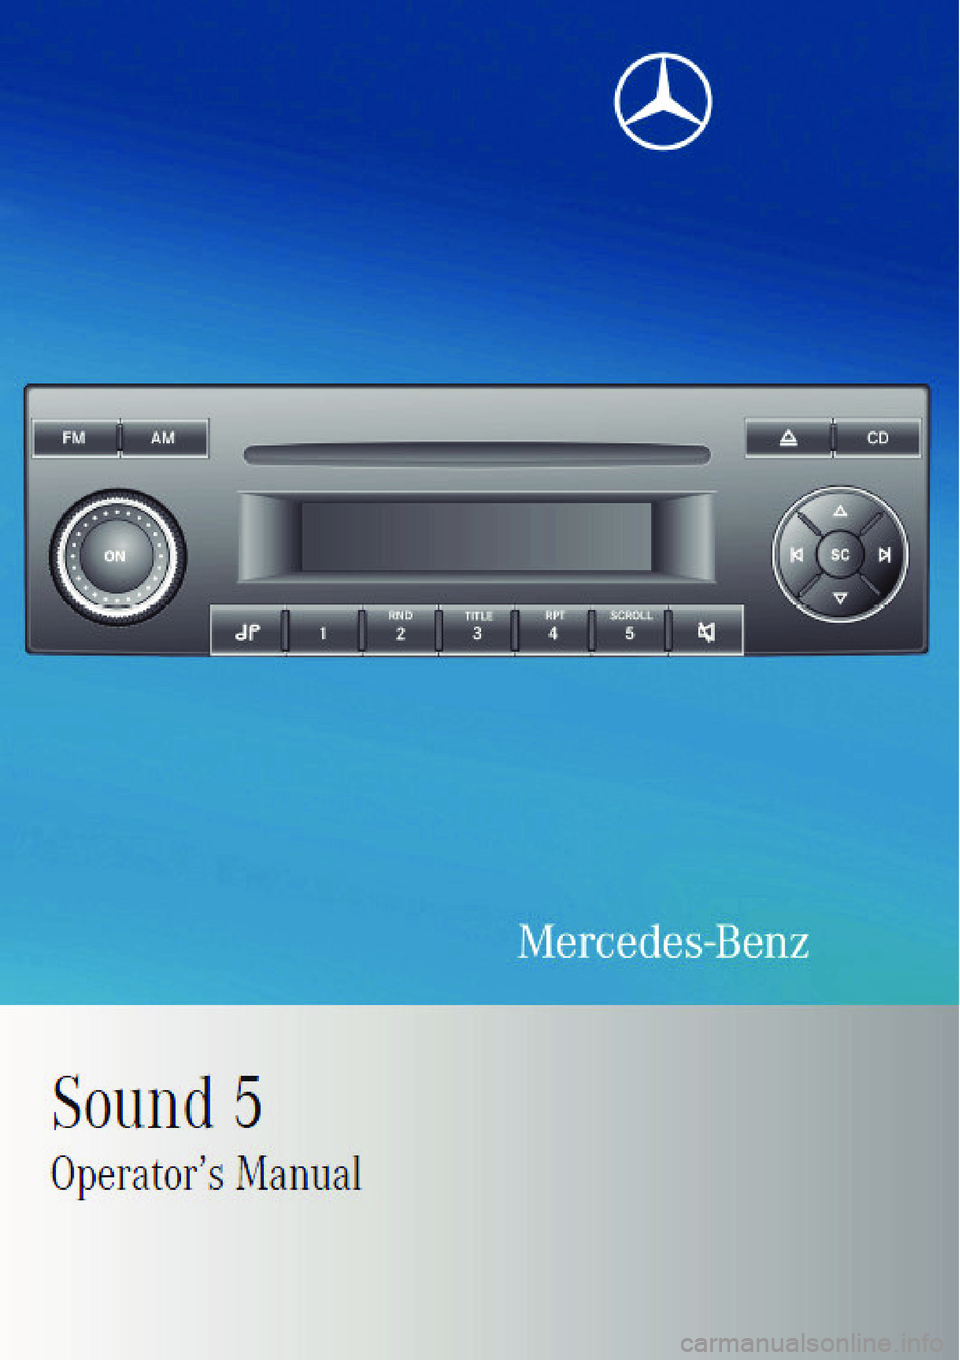 MERCEDES-BENZ SPRINTER 2011  MY 11 Audio Manual 